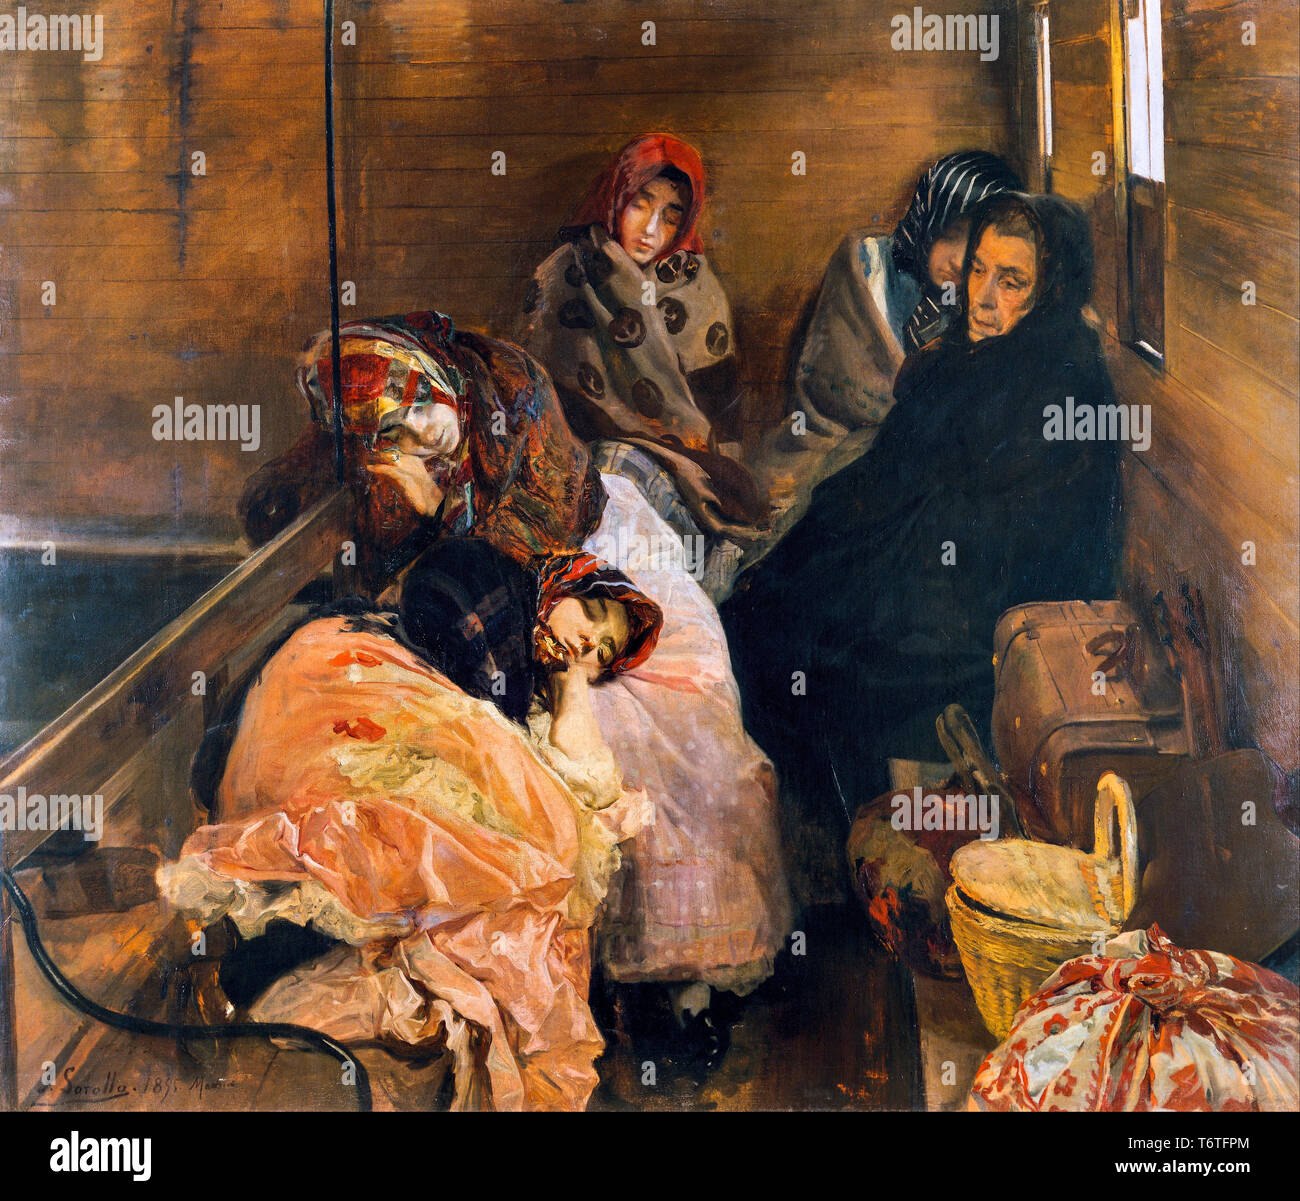 Joaquín Sorolla, traite des esclaves blancs, peinture à l'huile sur toile du peintre espagnol Joaquín Sorolla y Bastida (1863-1923), 1895 Banque D'Images